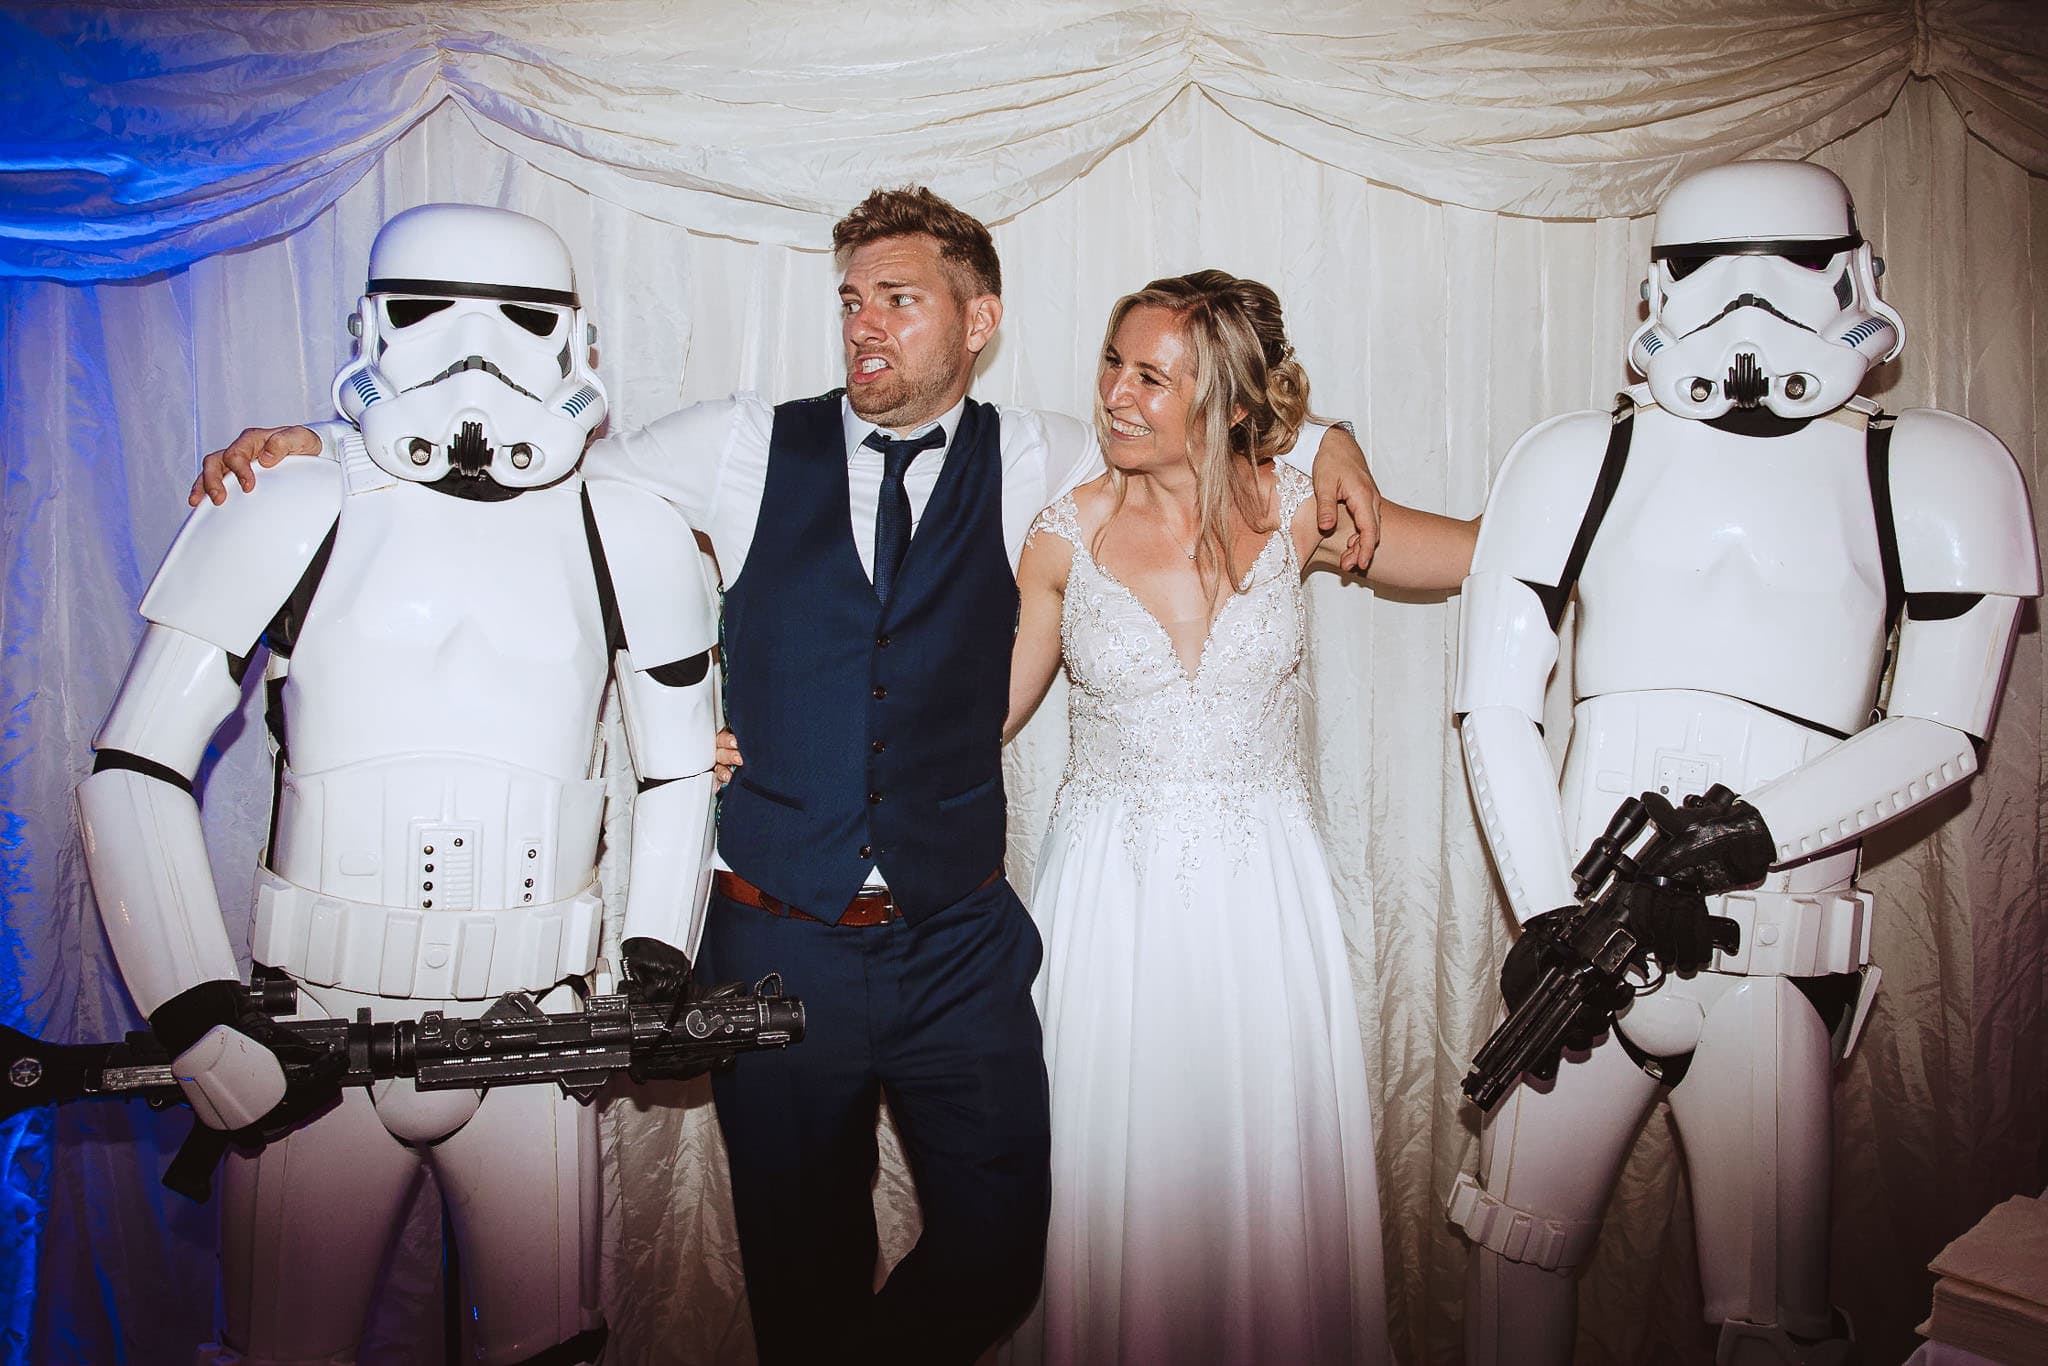 Star Wars themed wedding photo